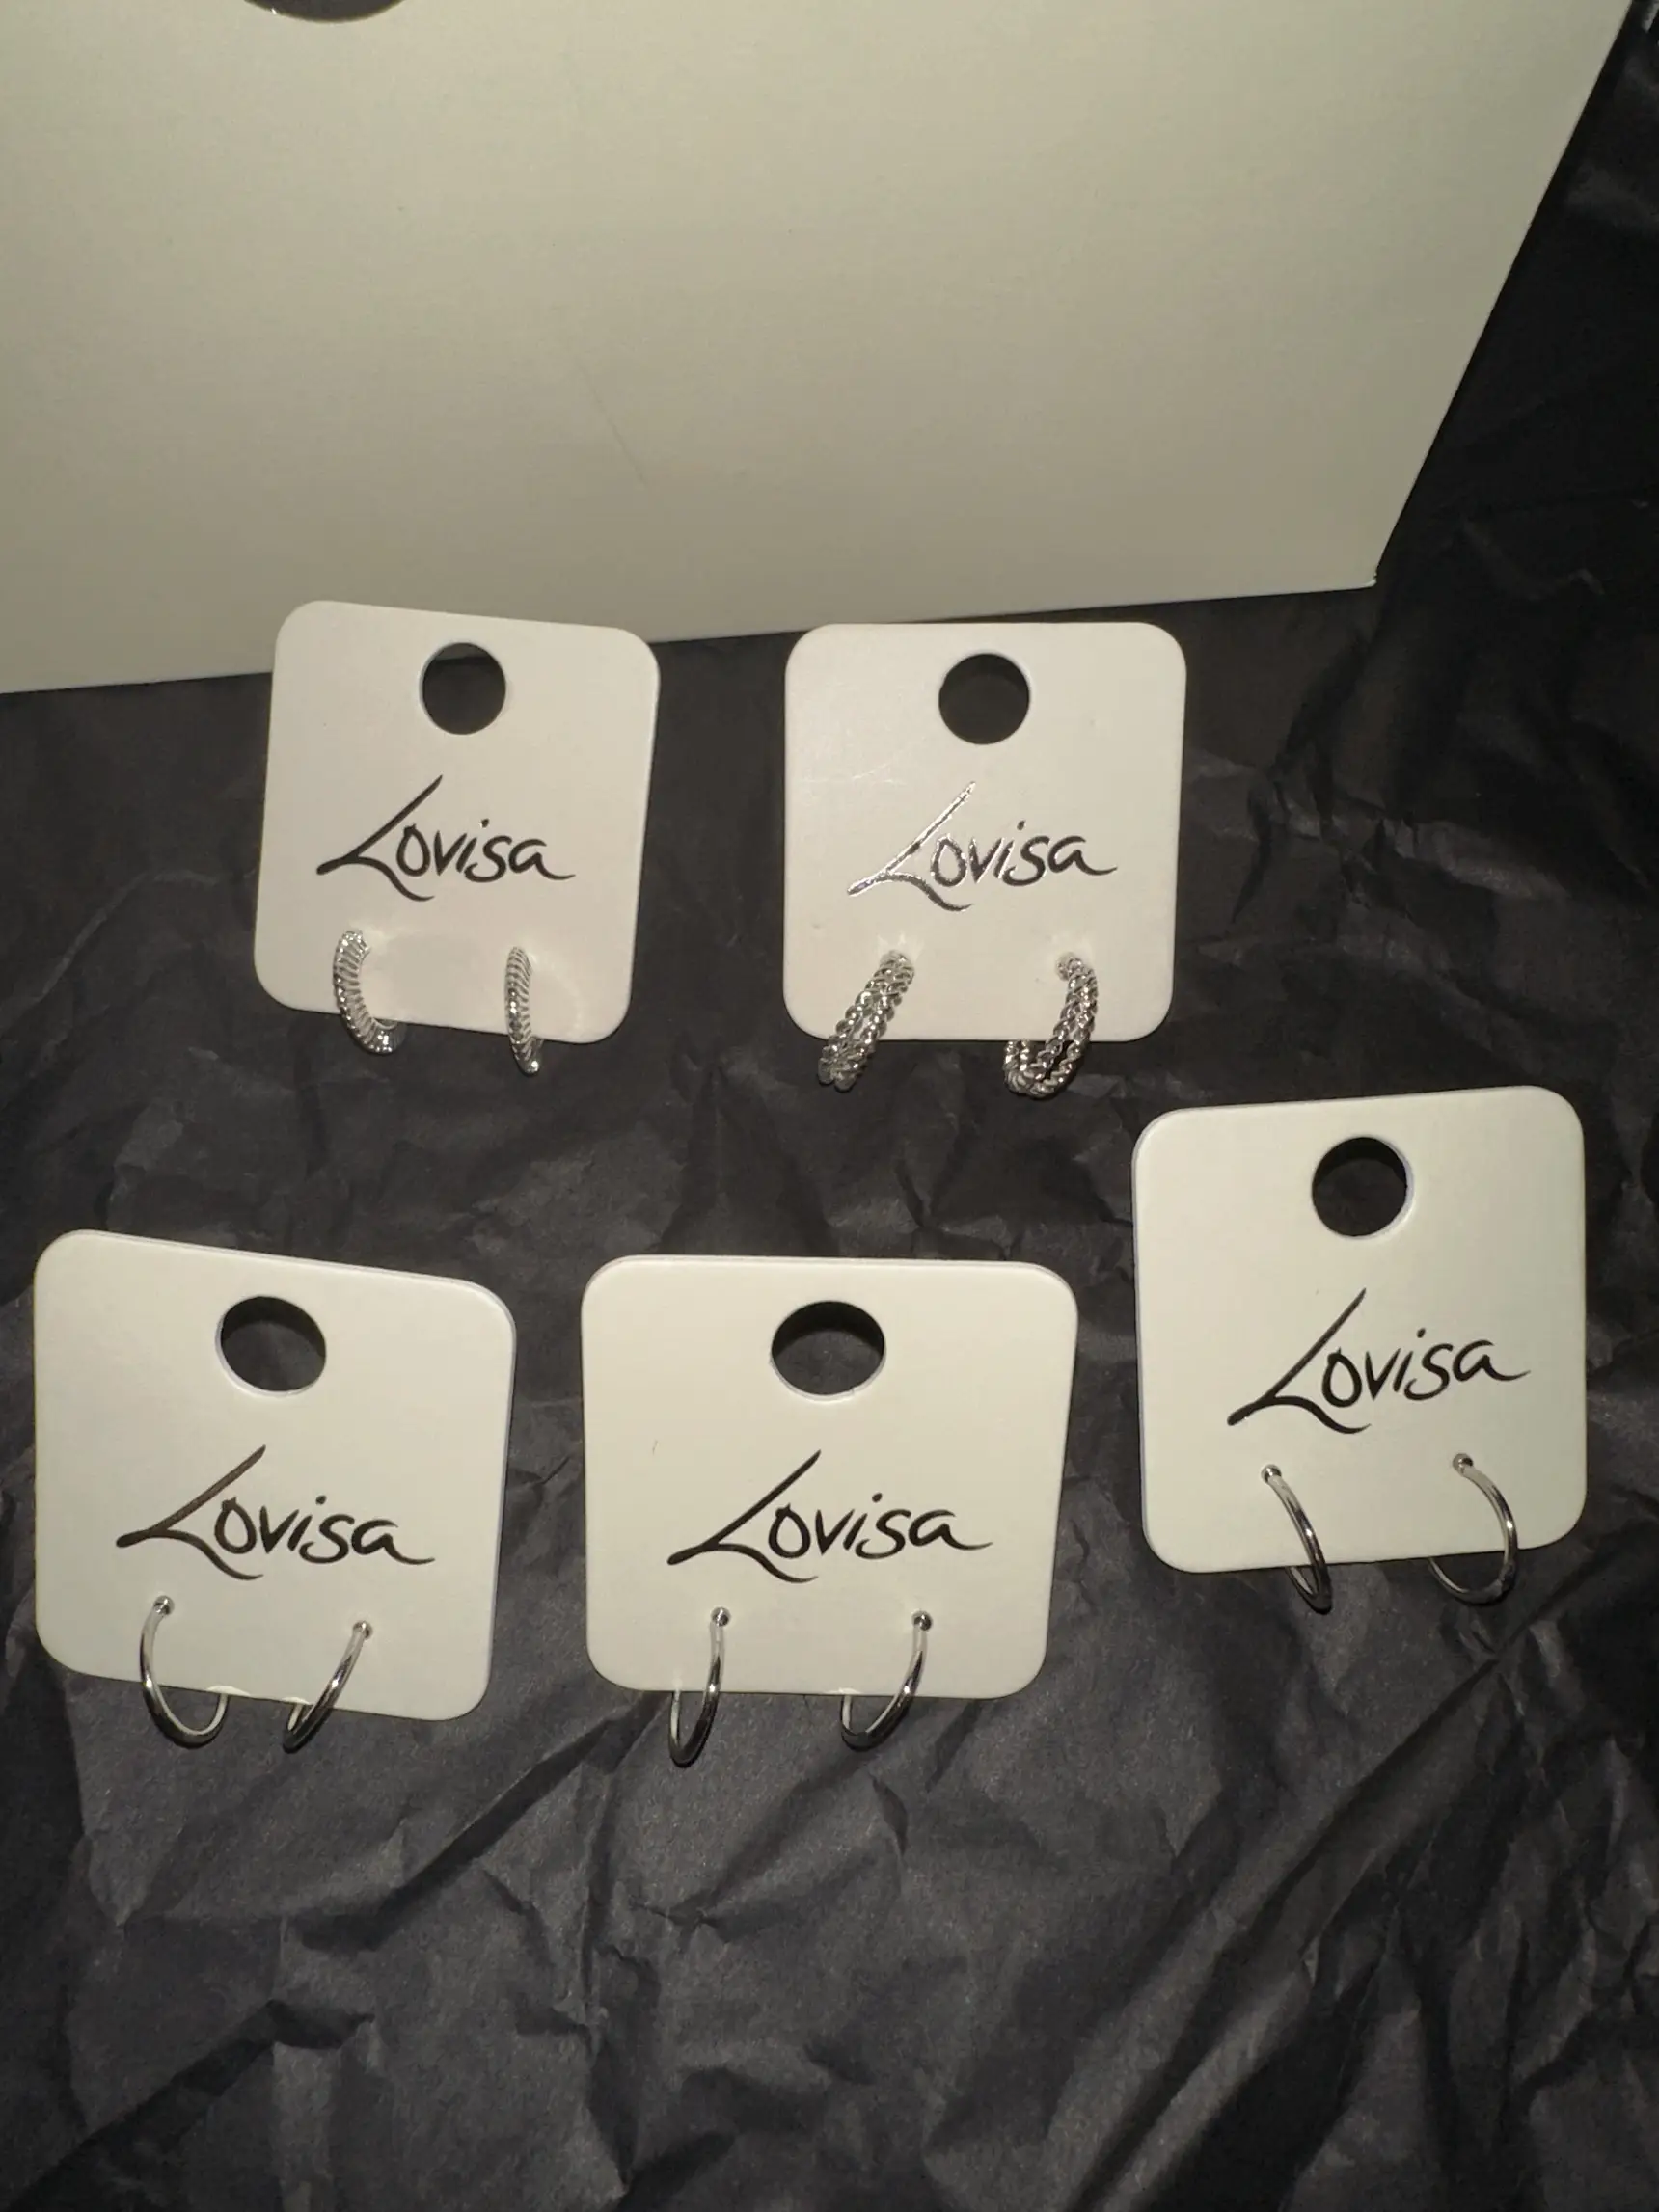 Lovisa #earrings lovisa girls Lovisa is defiantly my favorite